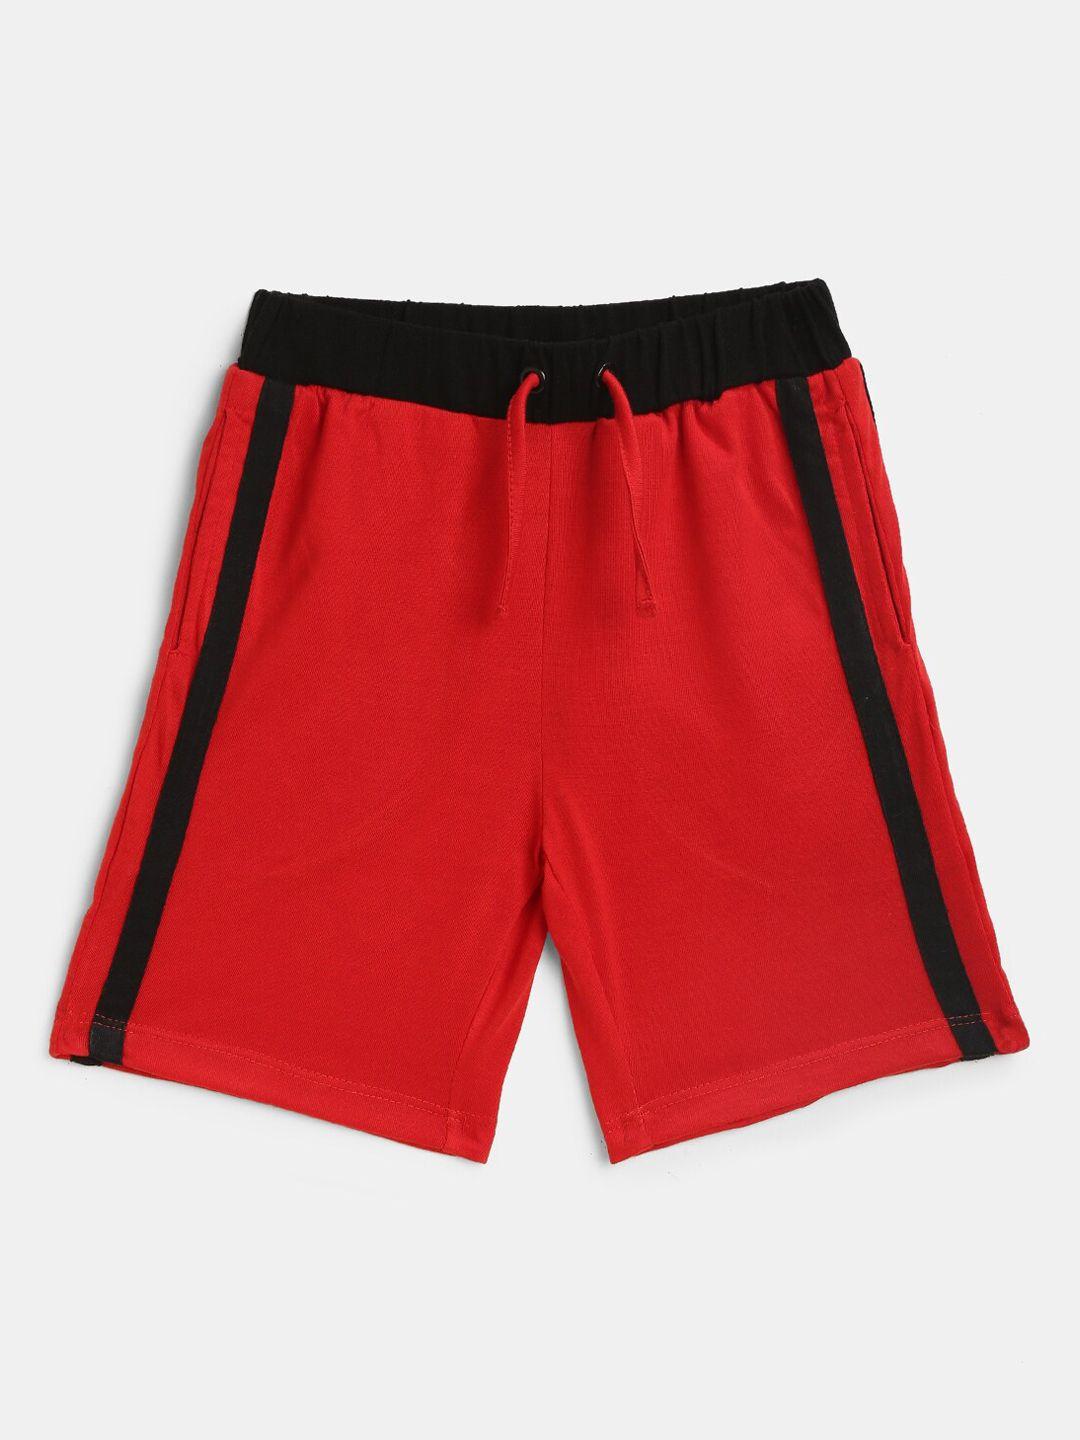 kidscraft boys red cotton shorts